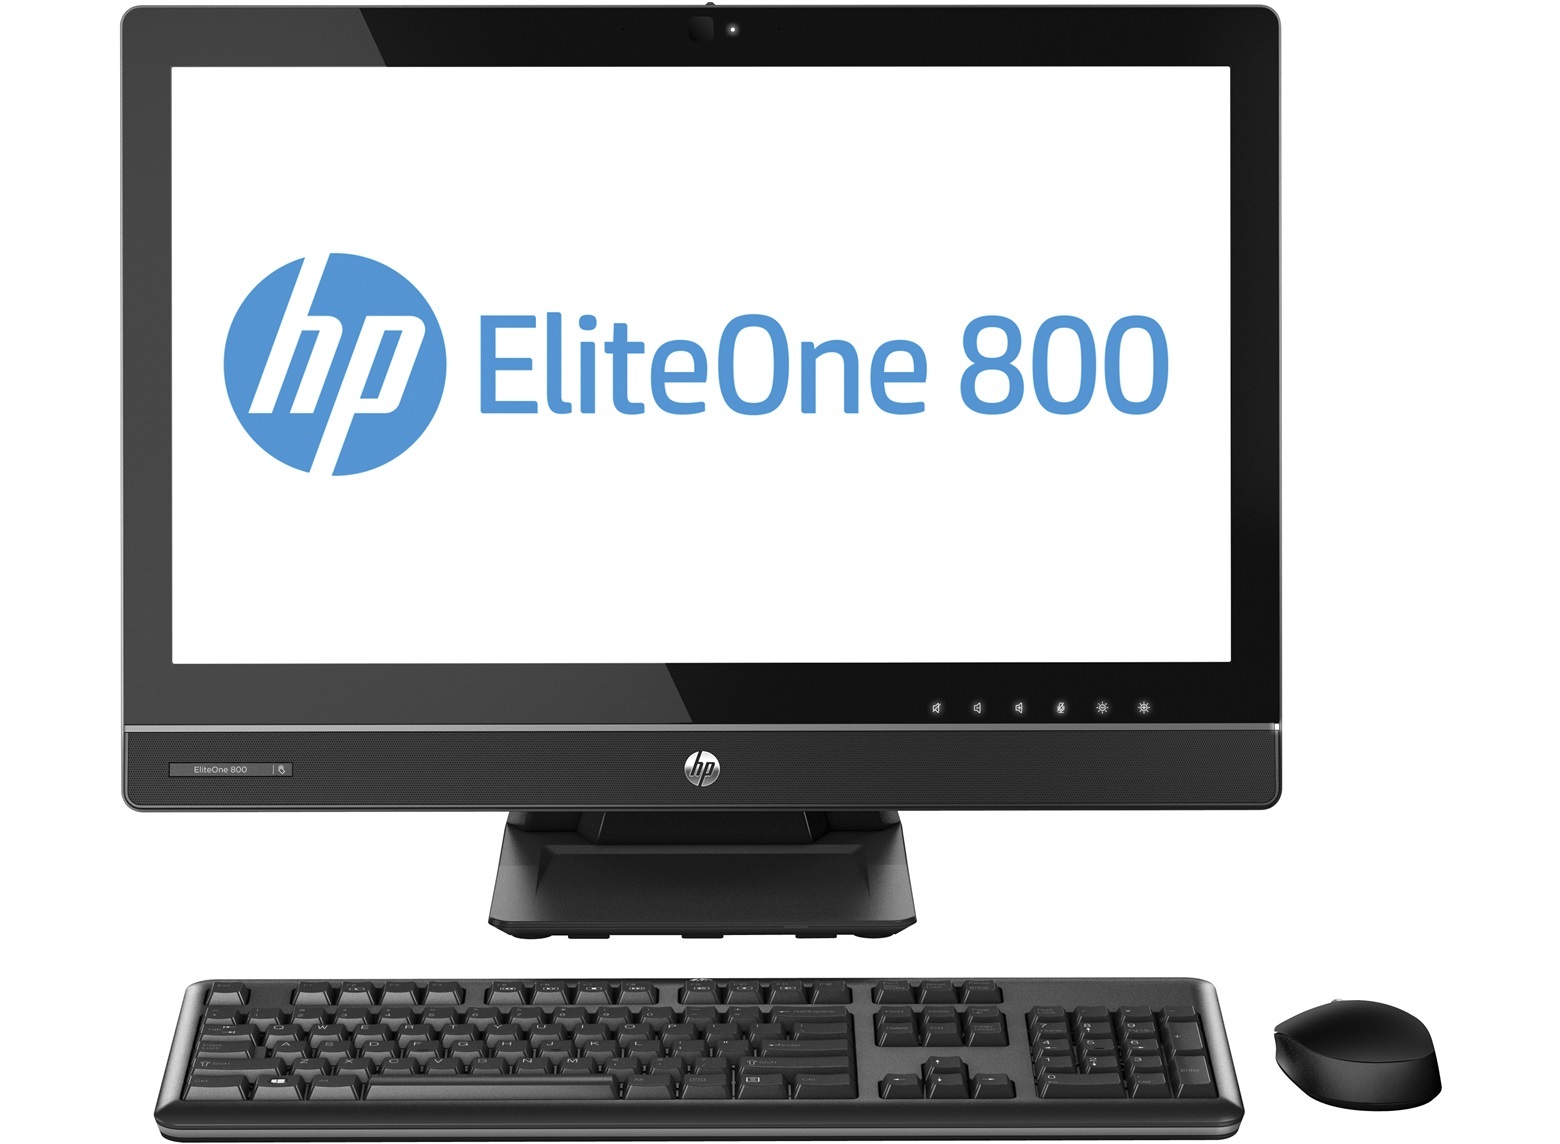 Máy tính để bàn HP All in one Elite One 800G1 (F7B90PA) - Intel Core i5-4670, 8GB RAM, 1TB HDD, AMD Radeon HD 7650A, 23 inch